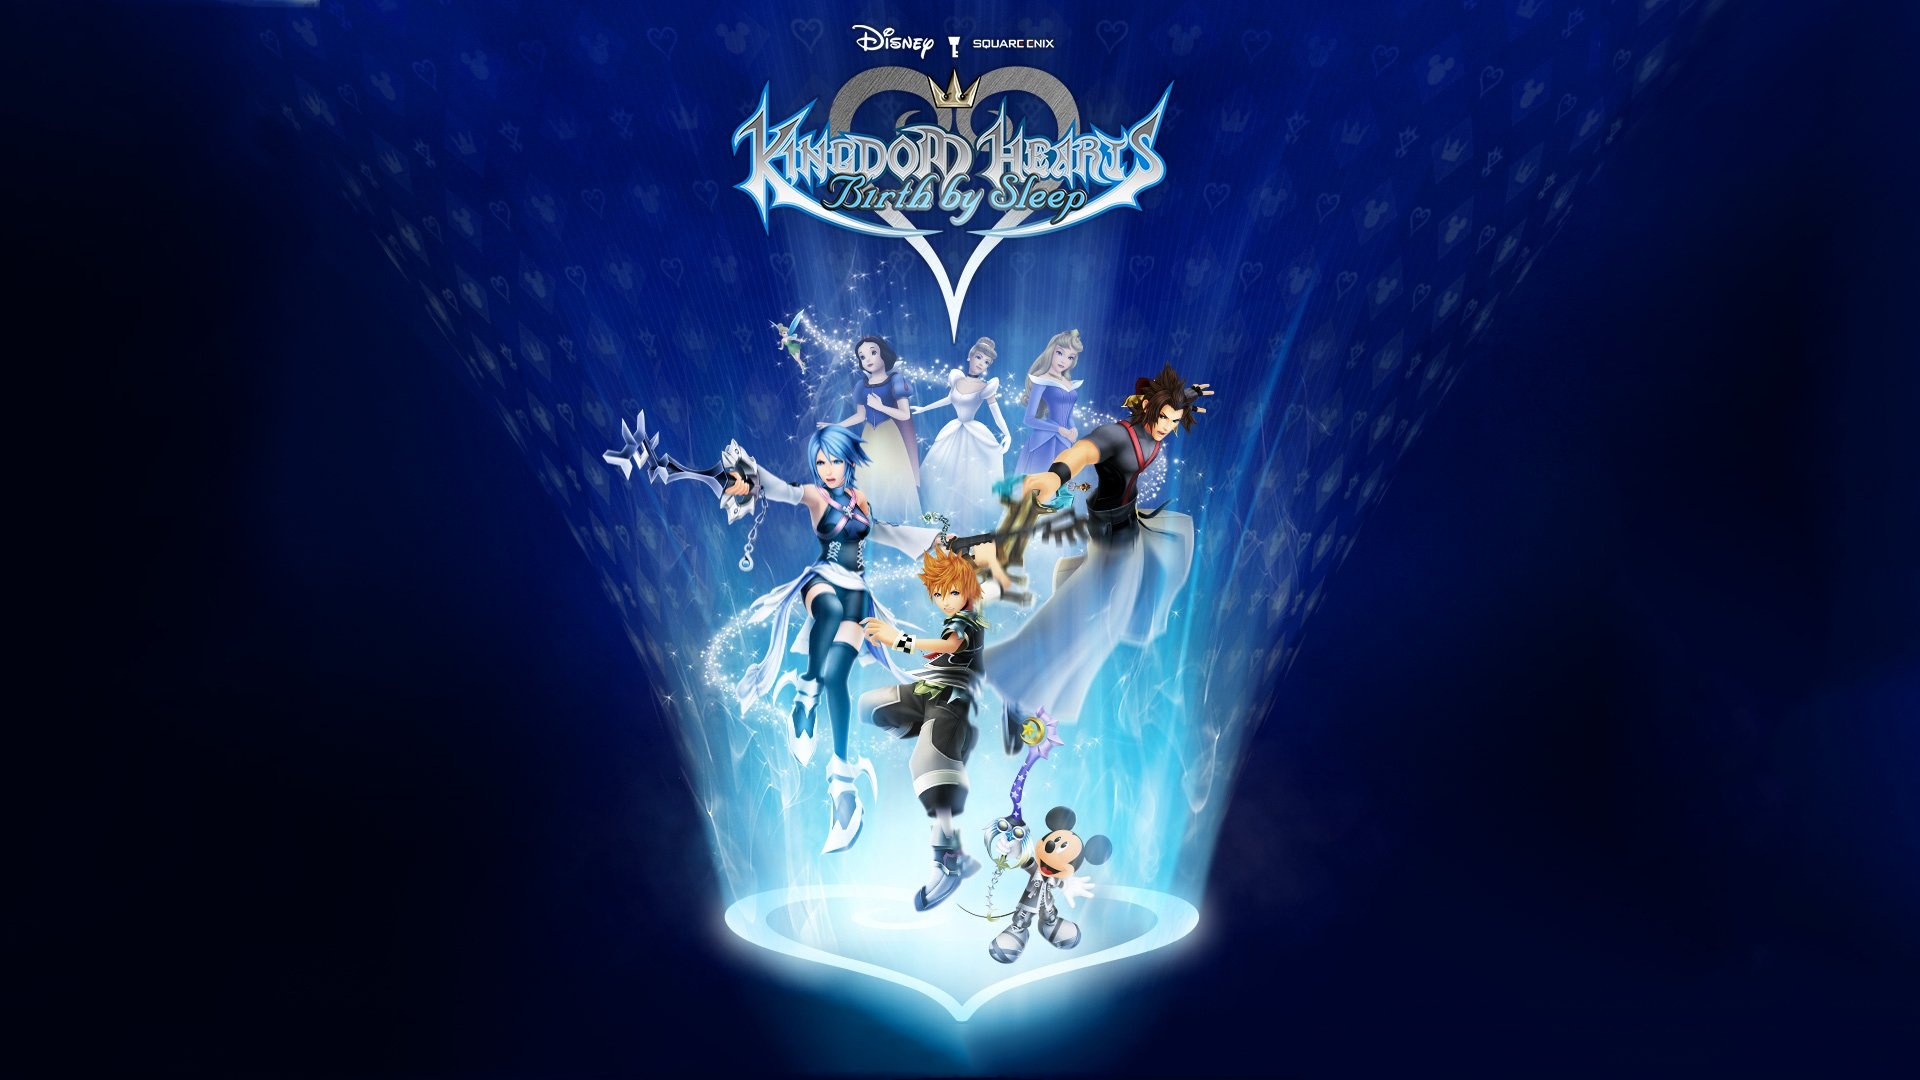 Kingdom Hearts Birth by Sleep, Beautiful artistry, Heartwarming moments, Memorable scenes, 1920x1080 Full HD Desktop